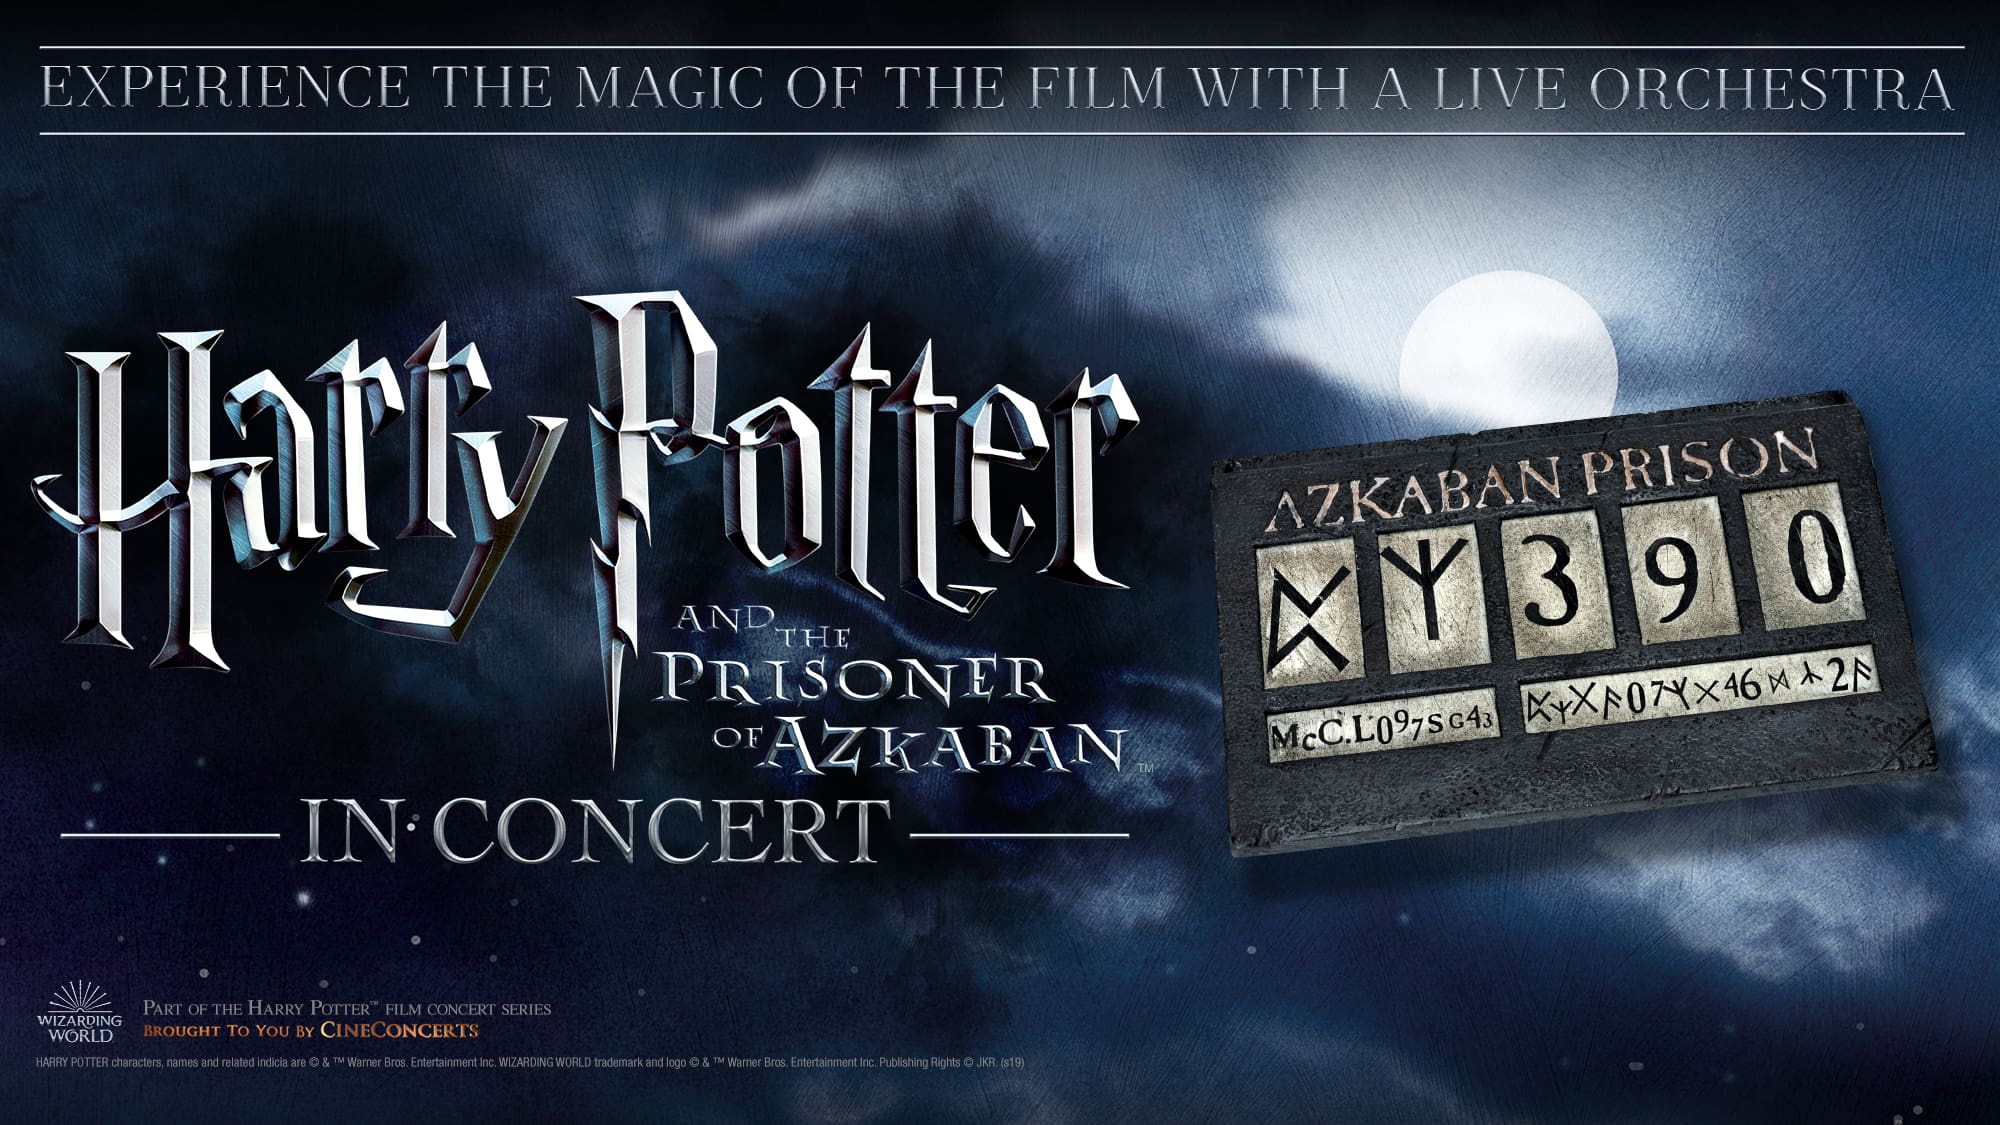 Harry Potter and the Prisoner of Azkaban™ In Concert